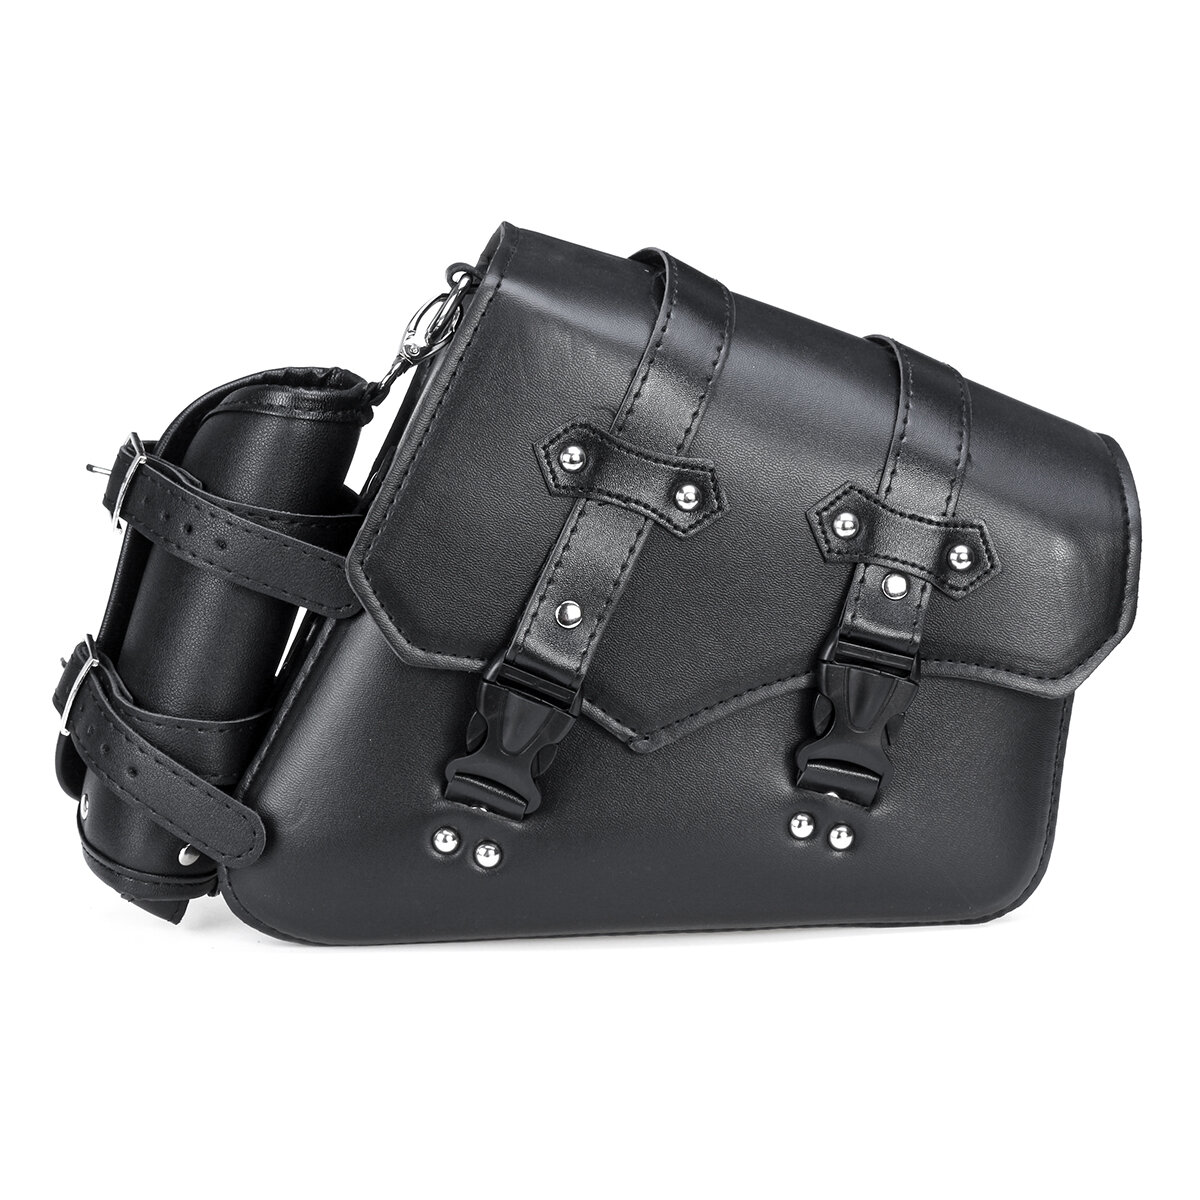 Image of Motorcycle Saddle Bag PU Leather Waterproof Saddlebags Black Left/Right Side For Harley Davidson Universal